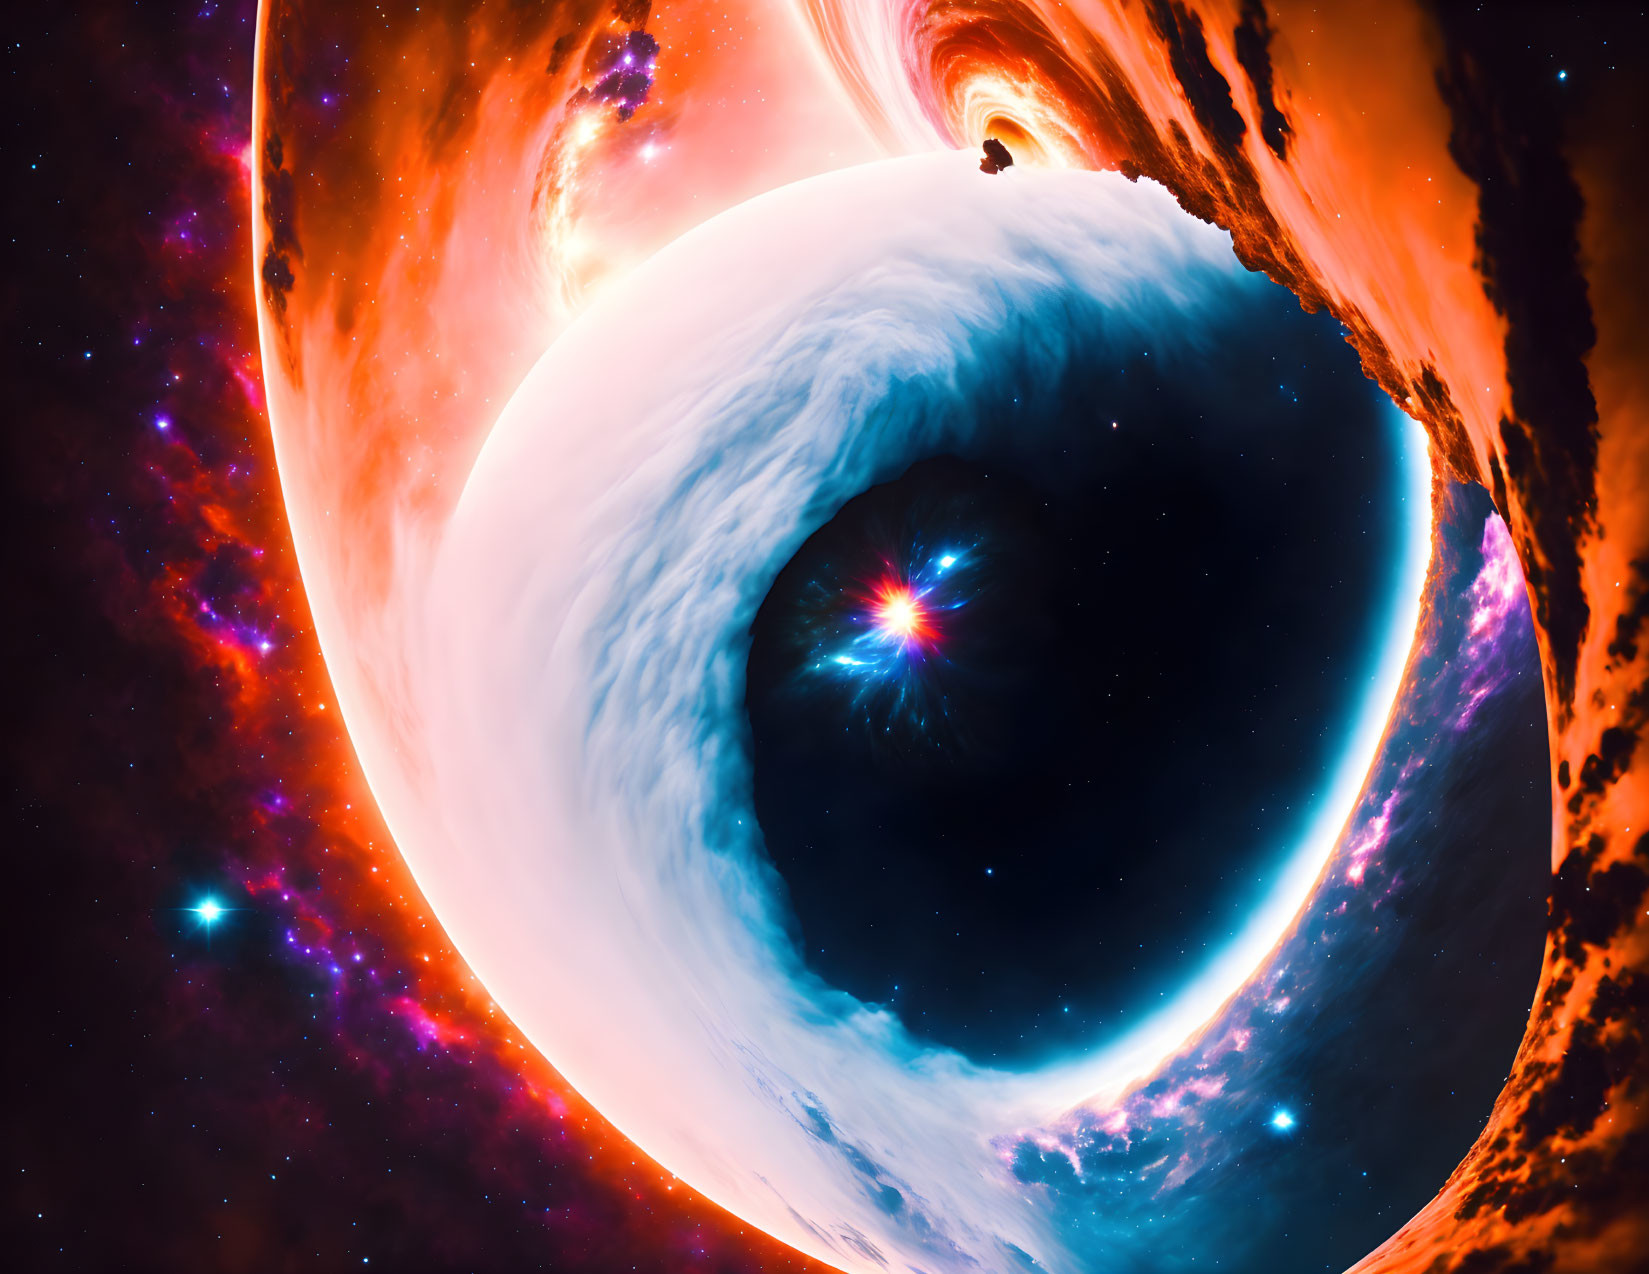 The galaxy's eye